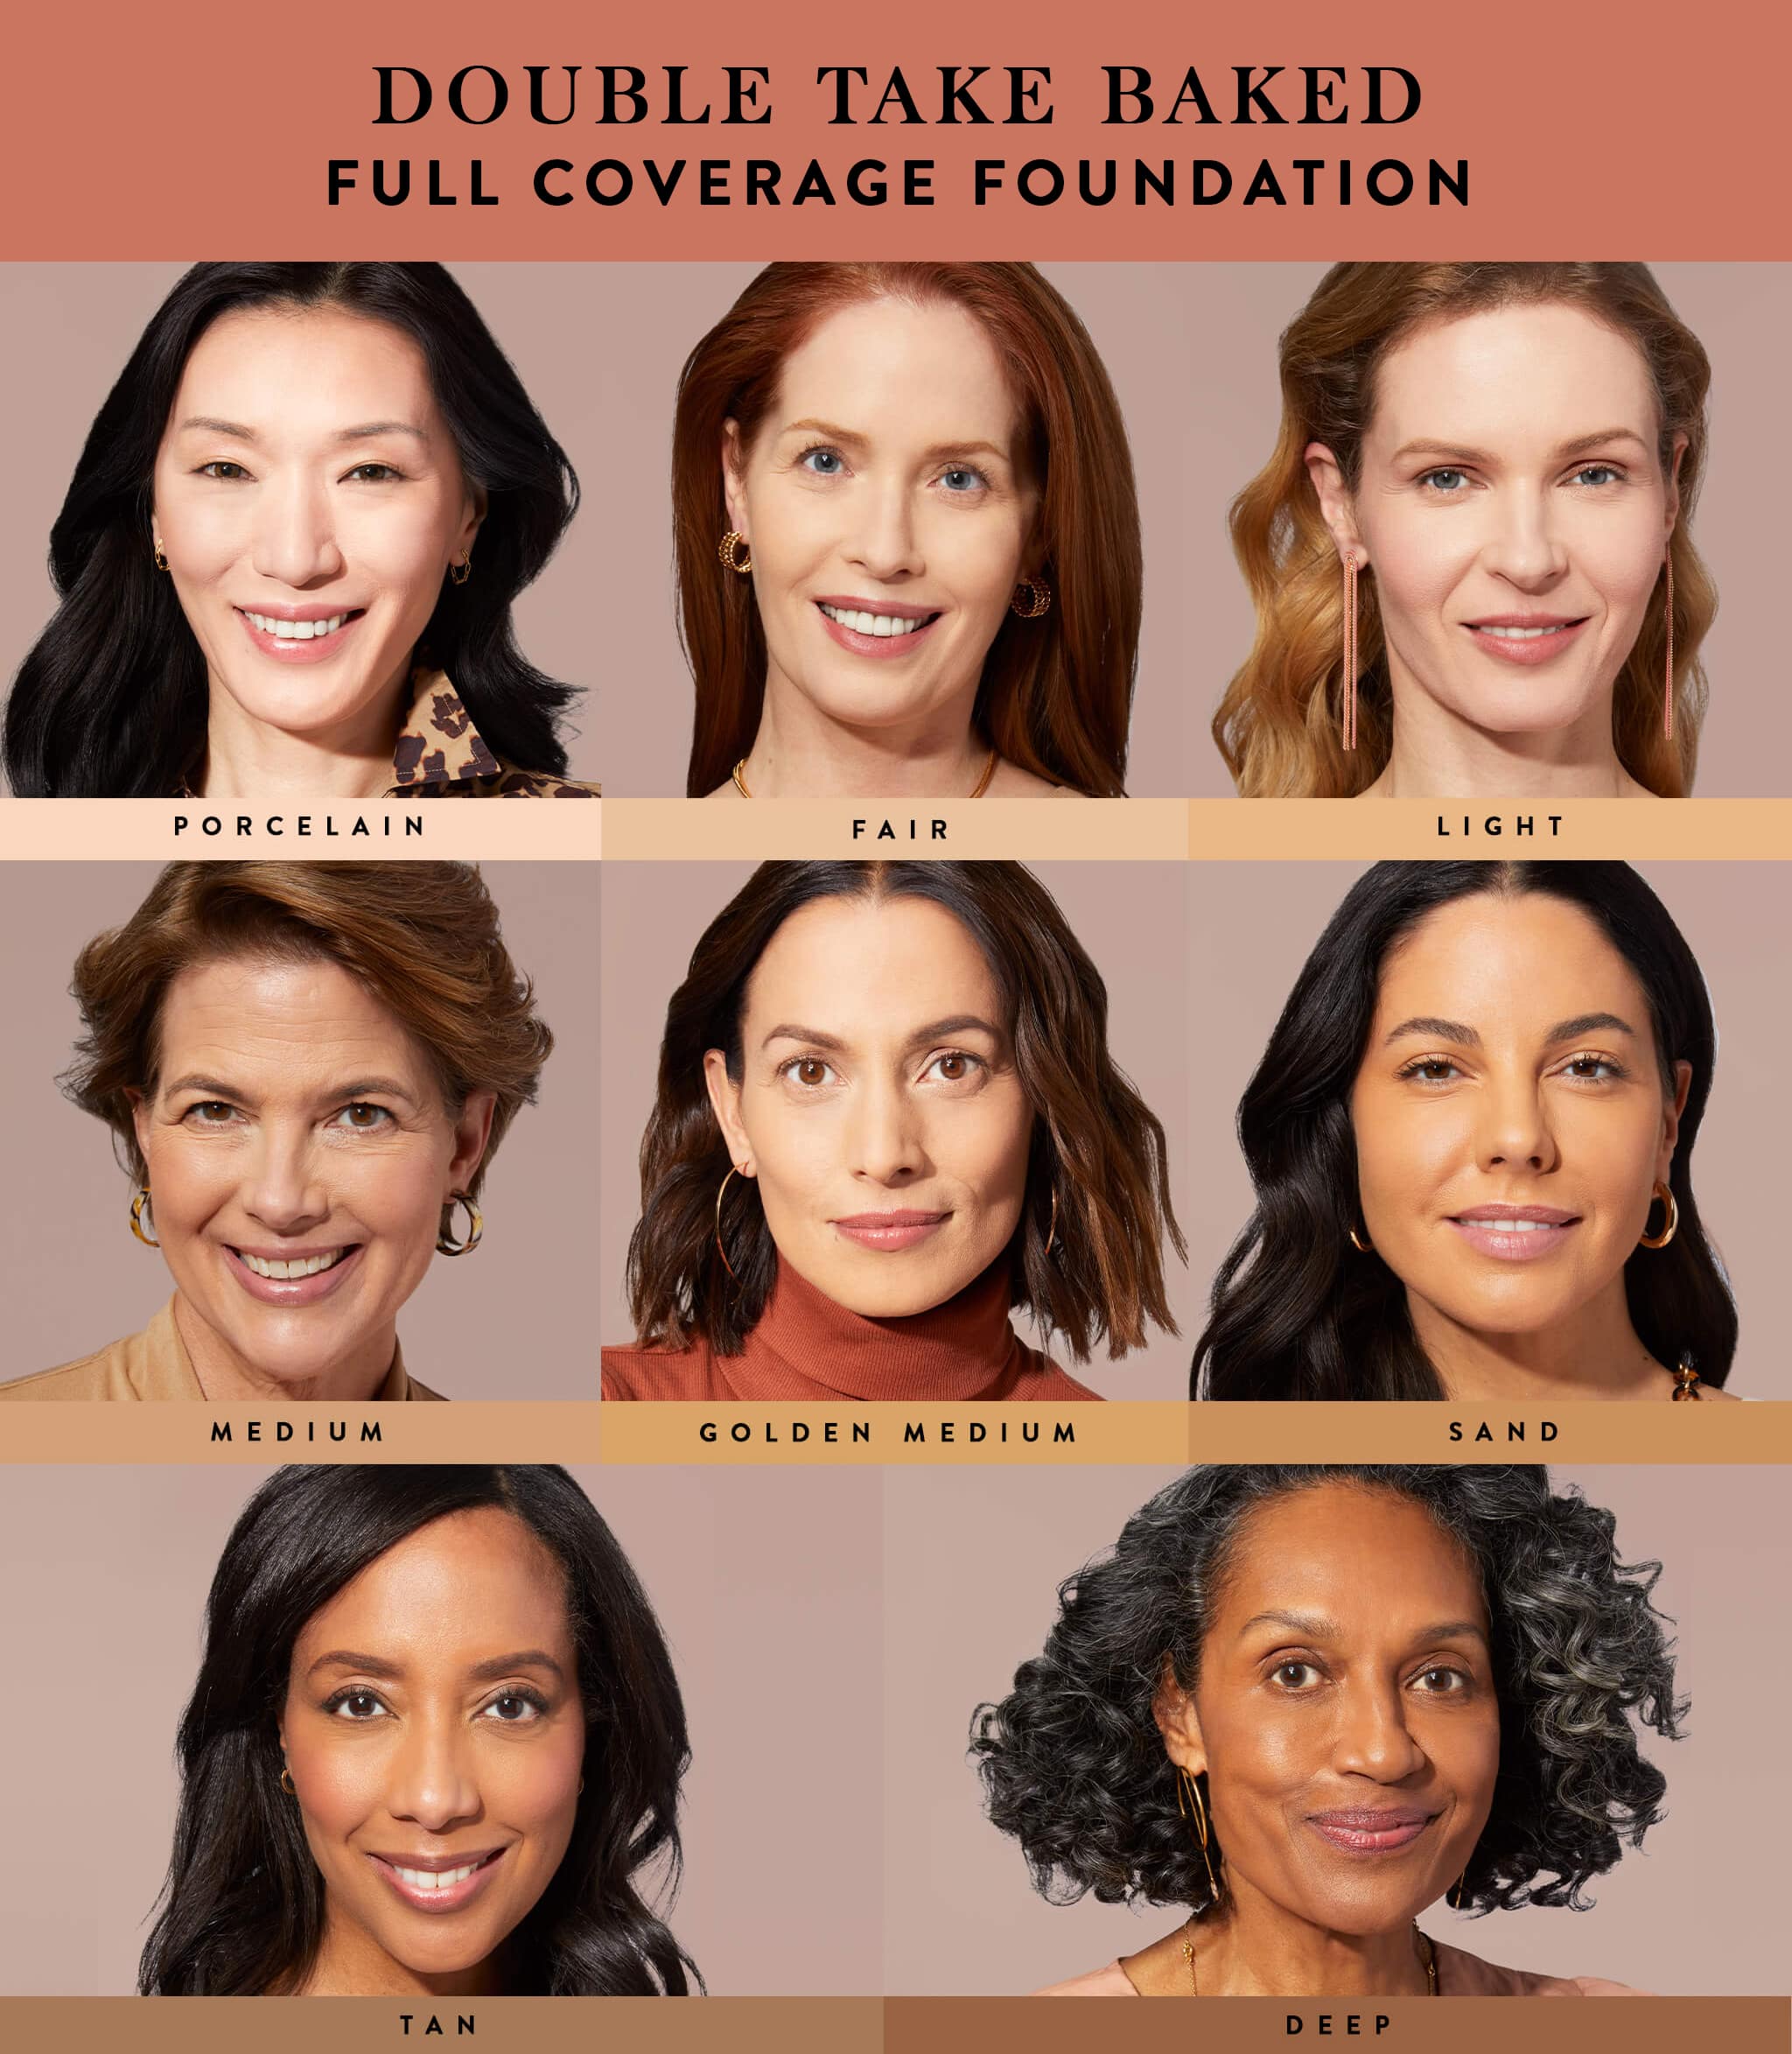 Foundation Coverage Types: Skin Tints vs. Medium vs. Full Coverage